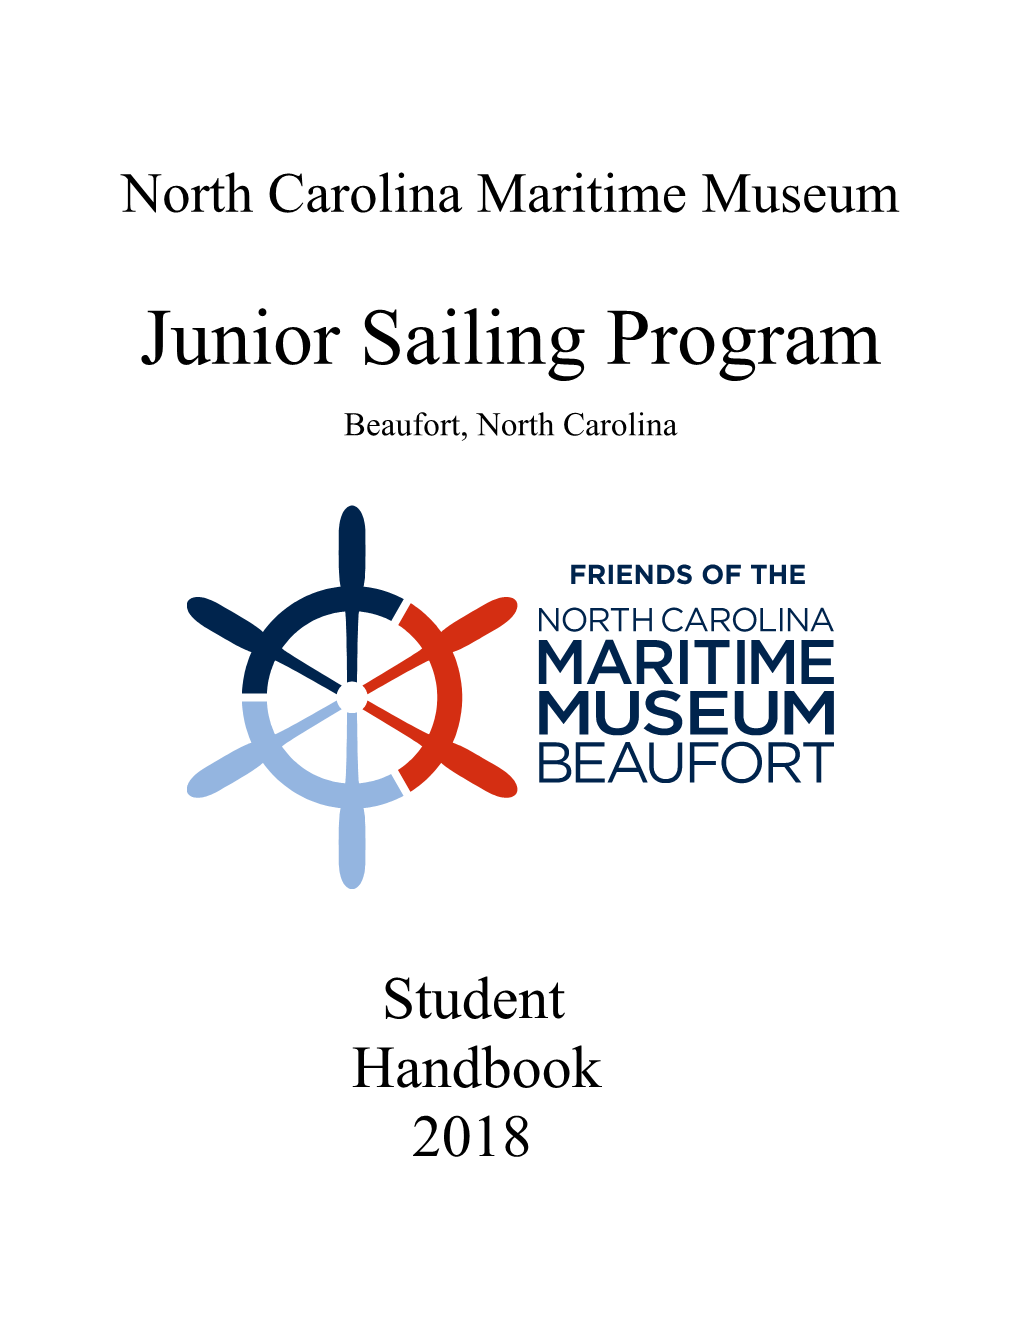 Friends of the North Carolina Maritime Museum